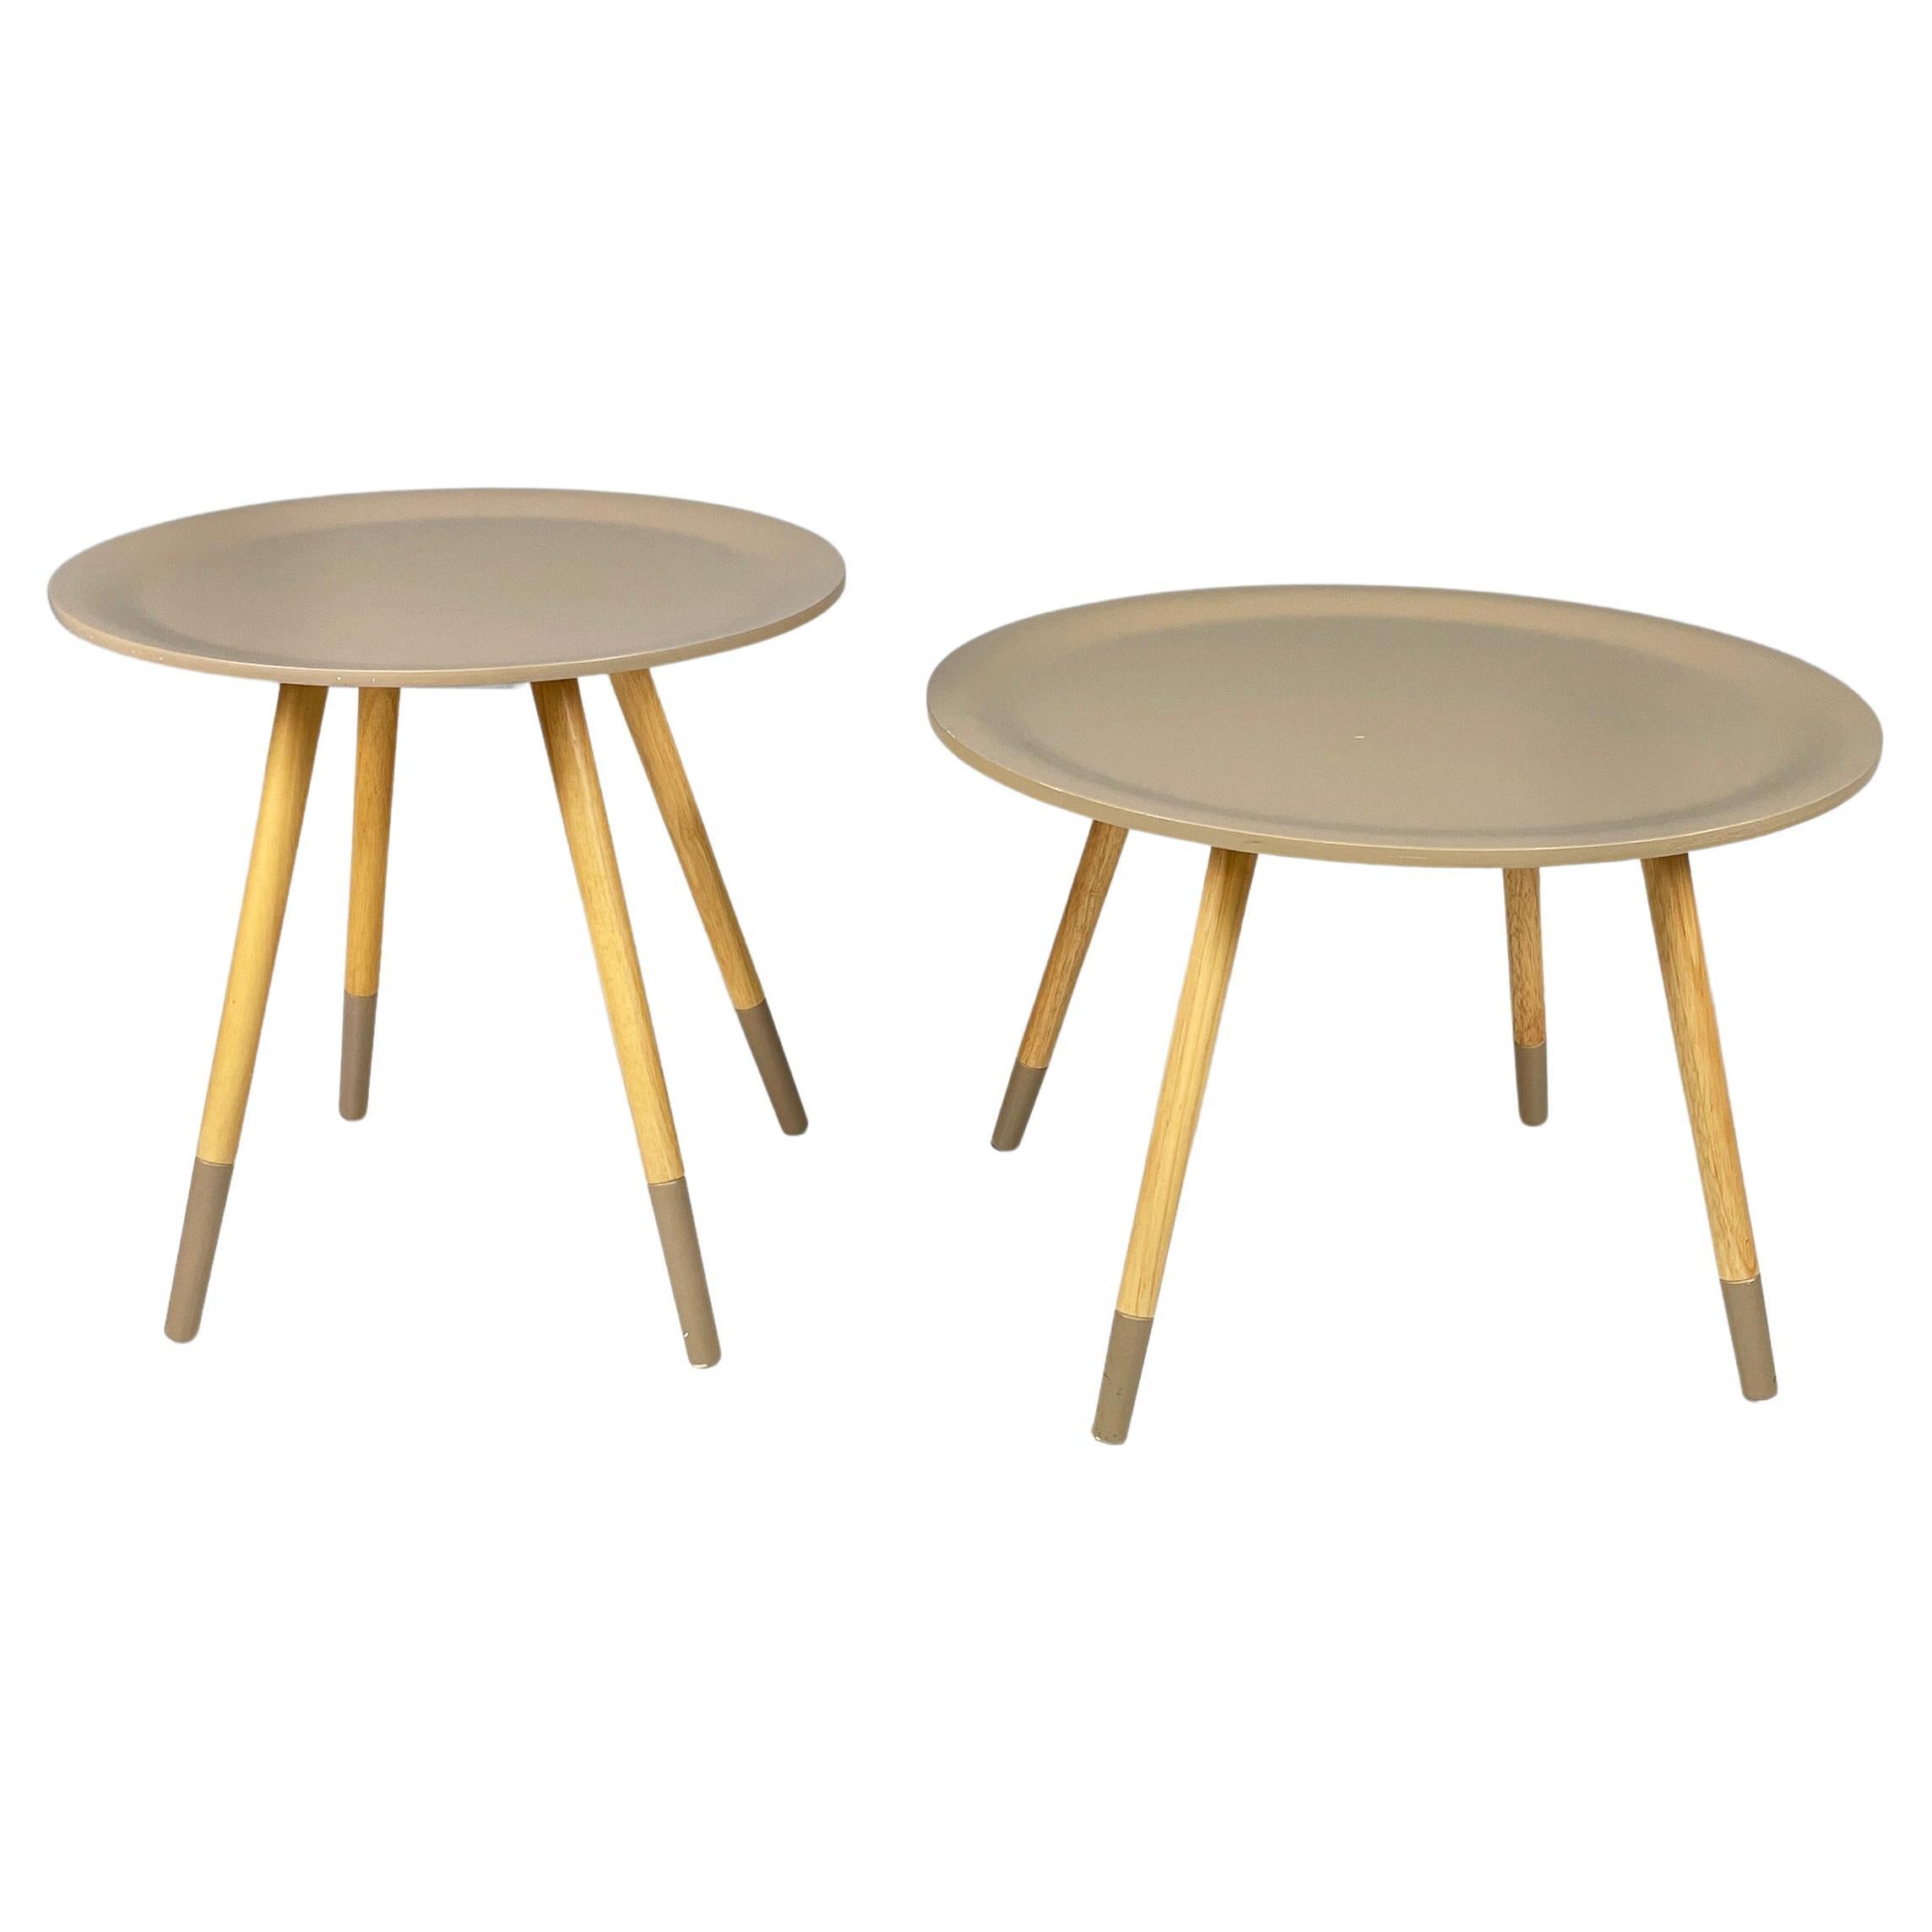 Italian modern round Coffee tables in beige wood, 2000s